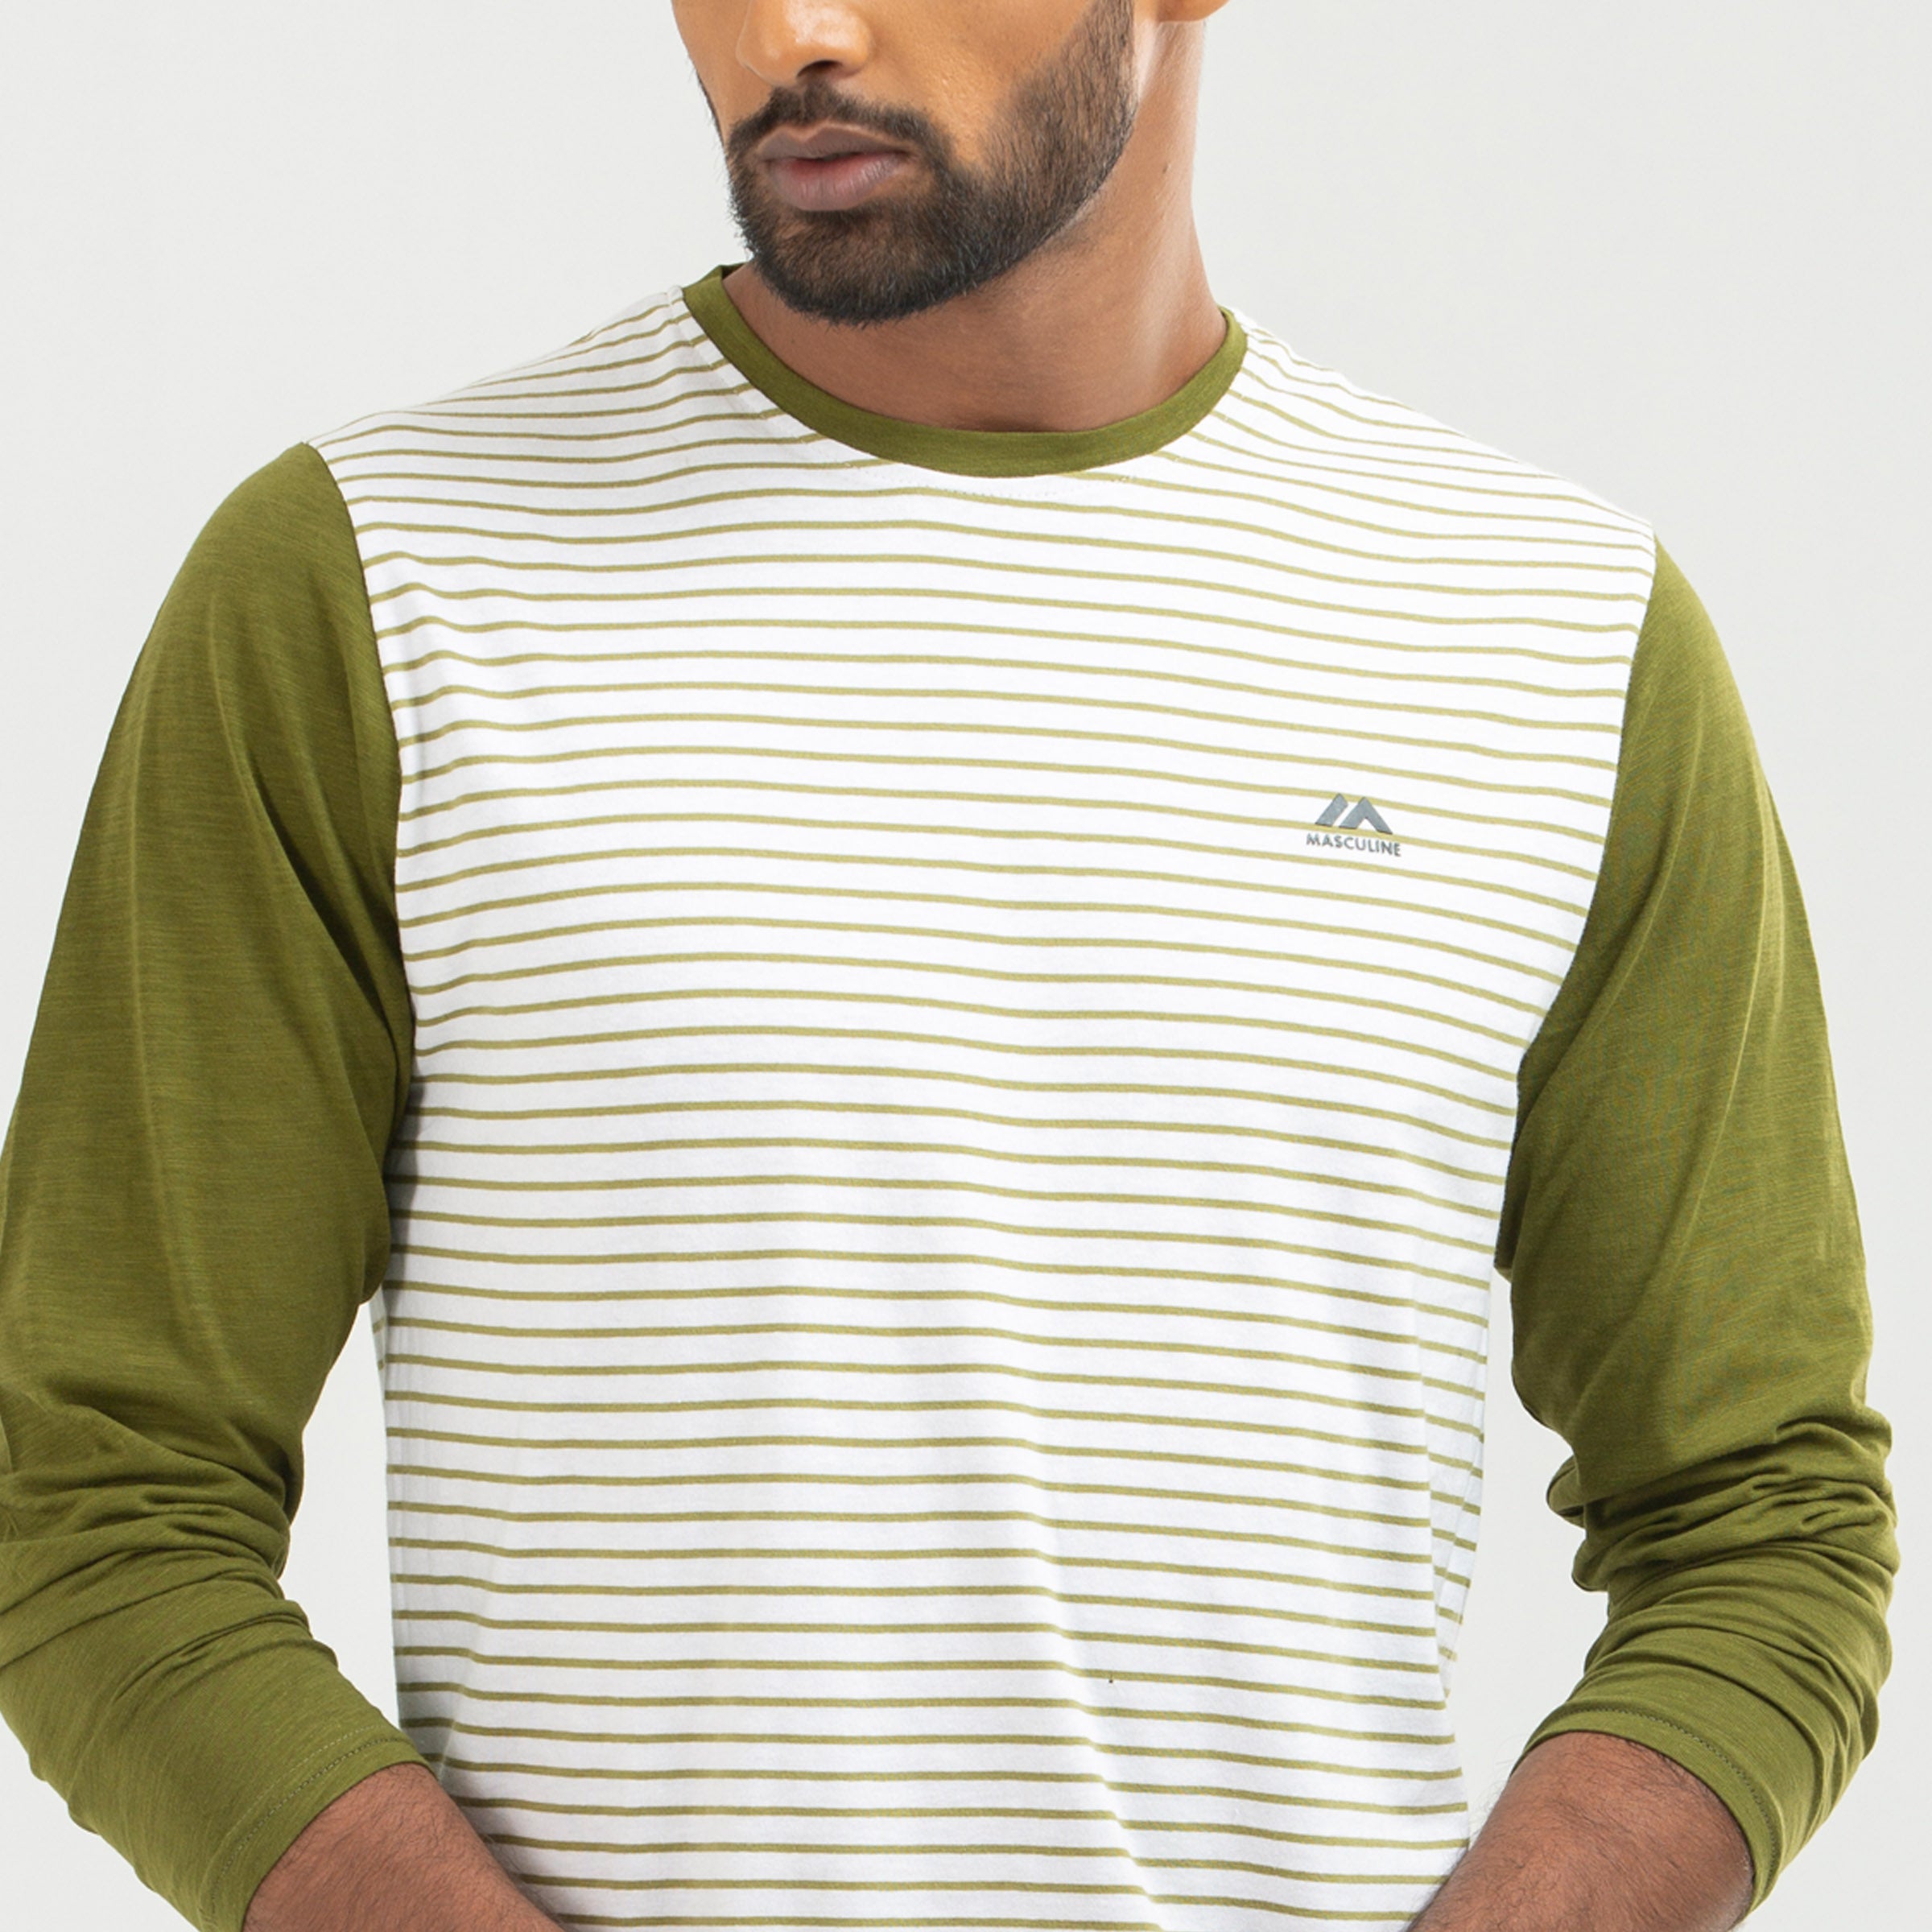 Stripe Contrast Long Sleeve T-shirt - Dark olive